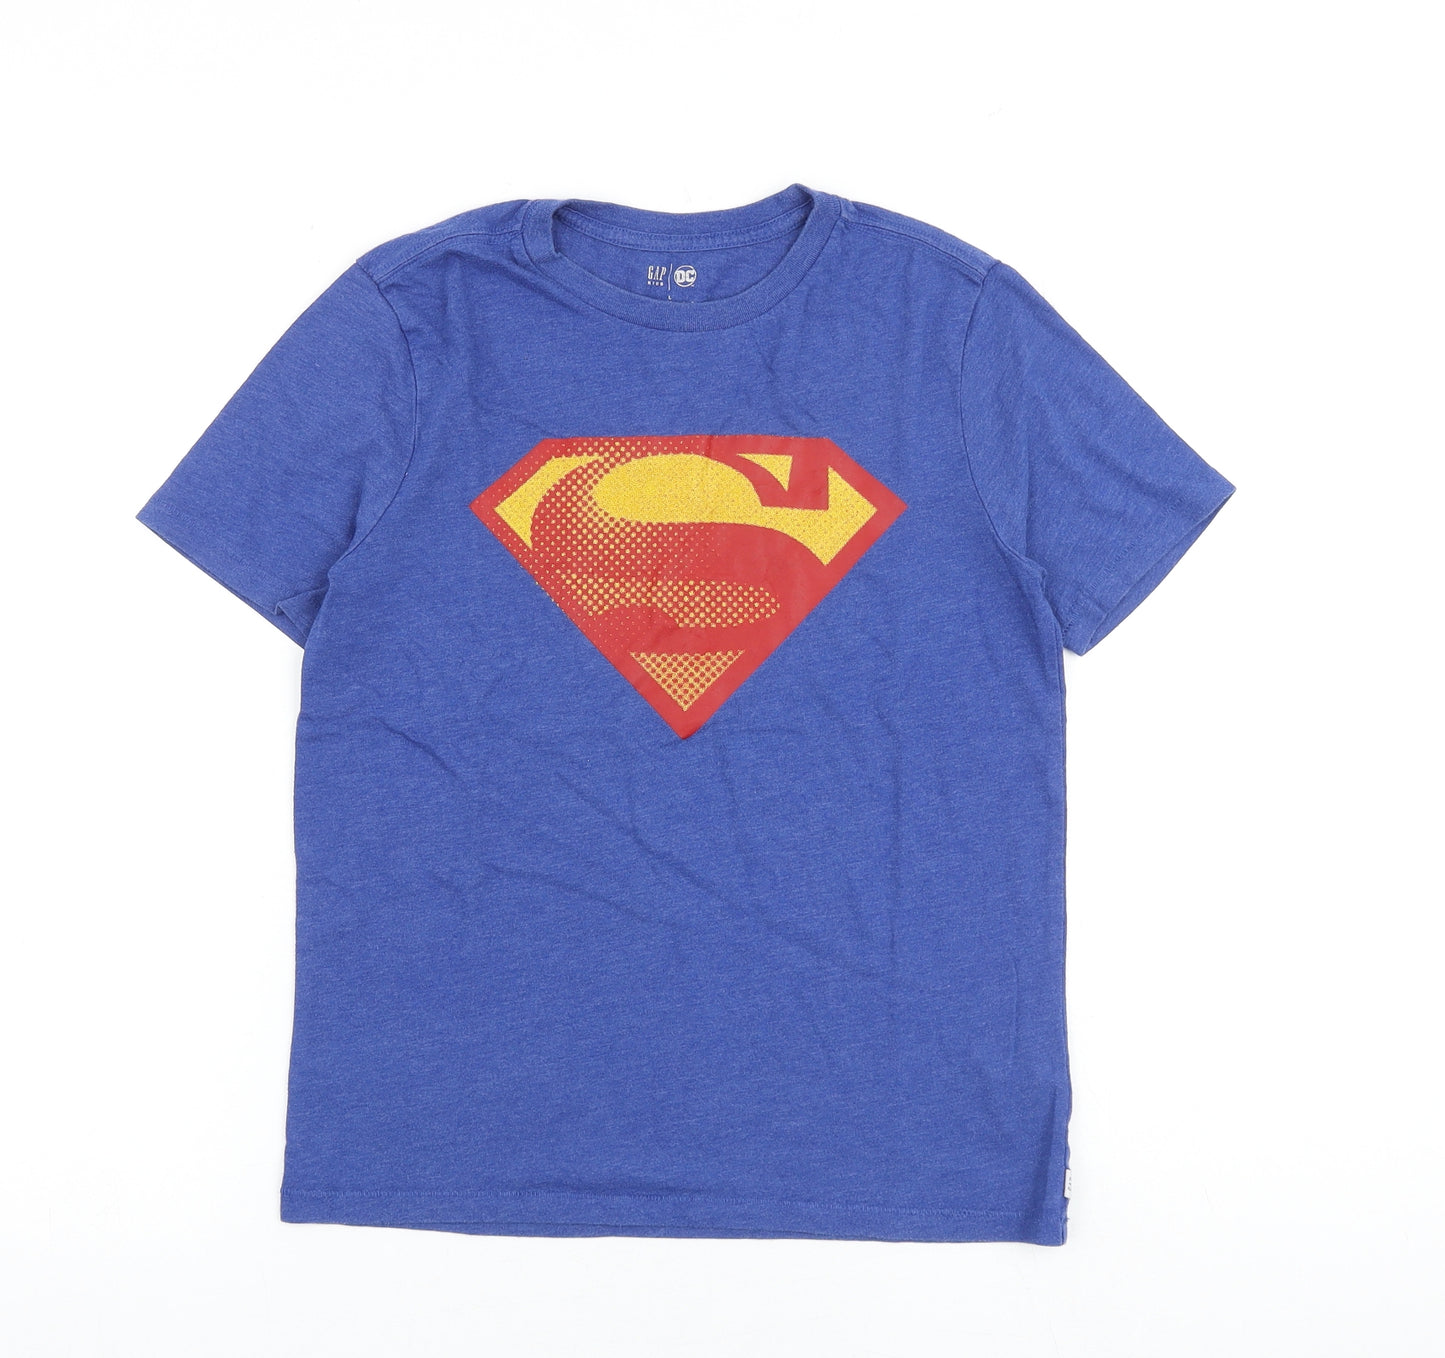 Gap Boys Blue 100% Cotton Basic T-Shirt Size 10-11 Years Round Neck Pullover - Superman